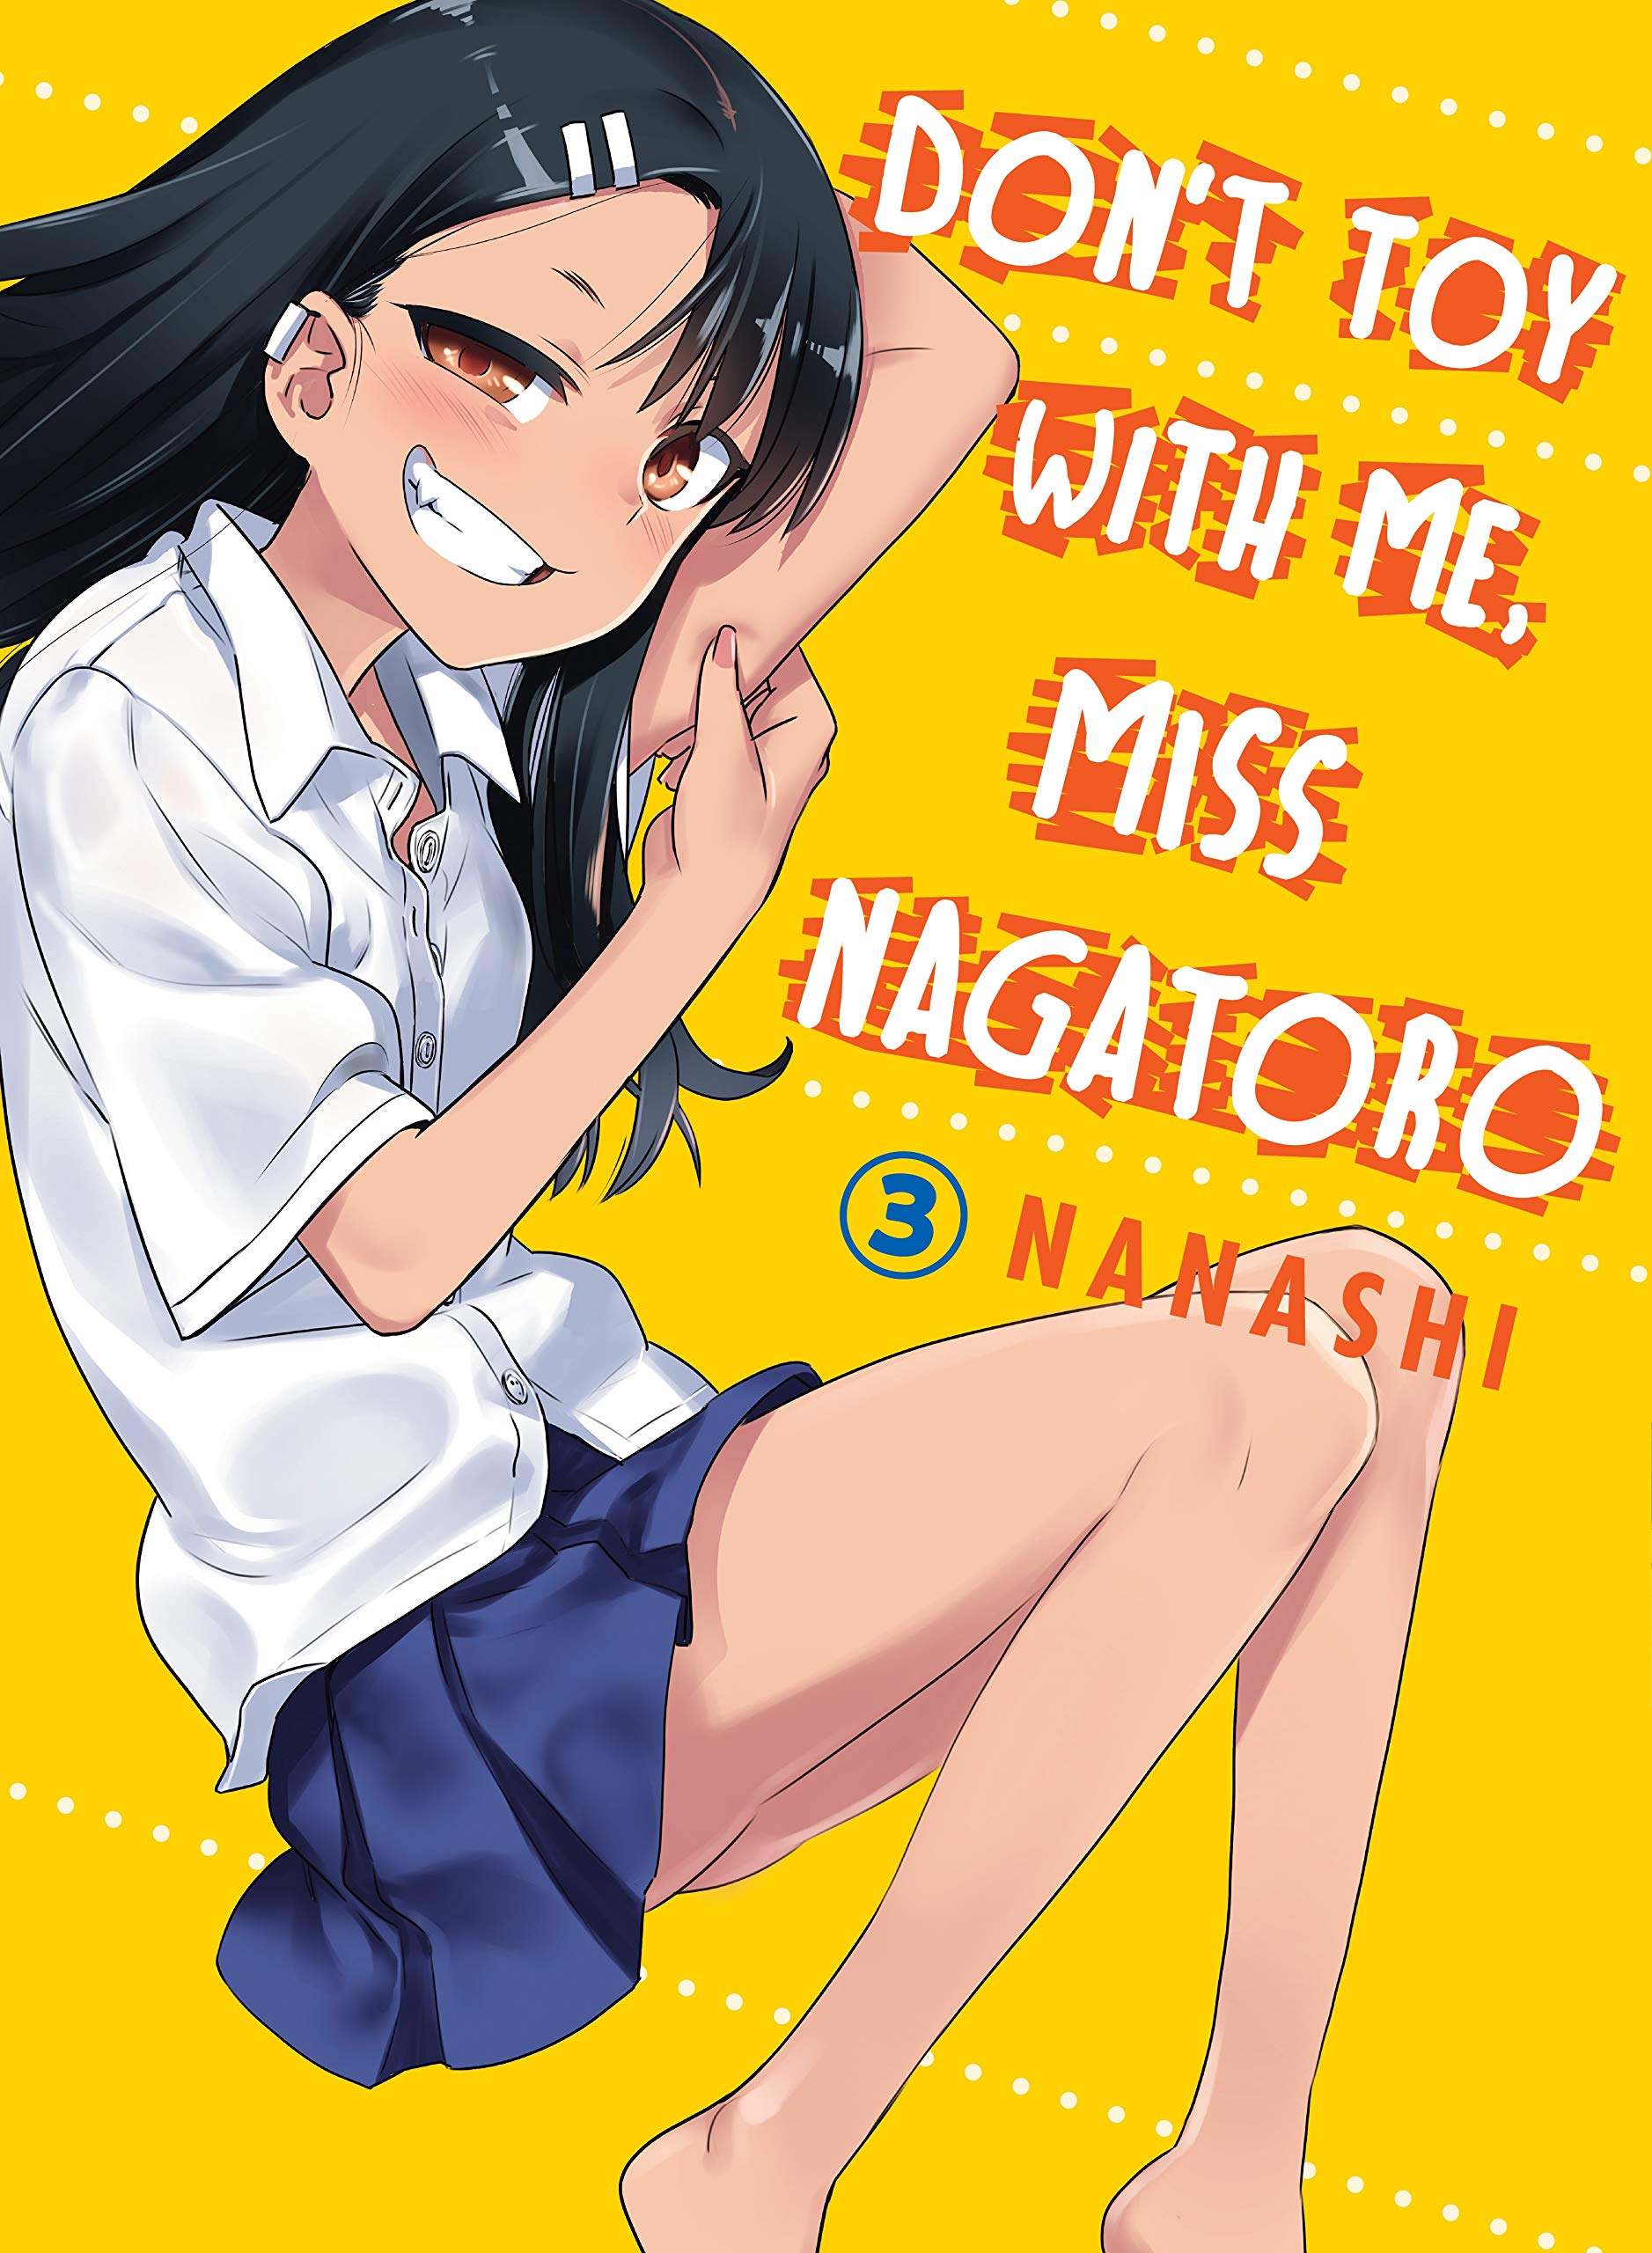 Don't Toy with Me Miss Nagatoro Manga Volume 3